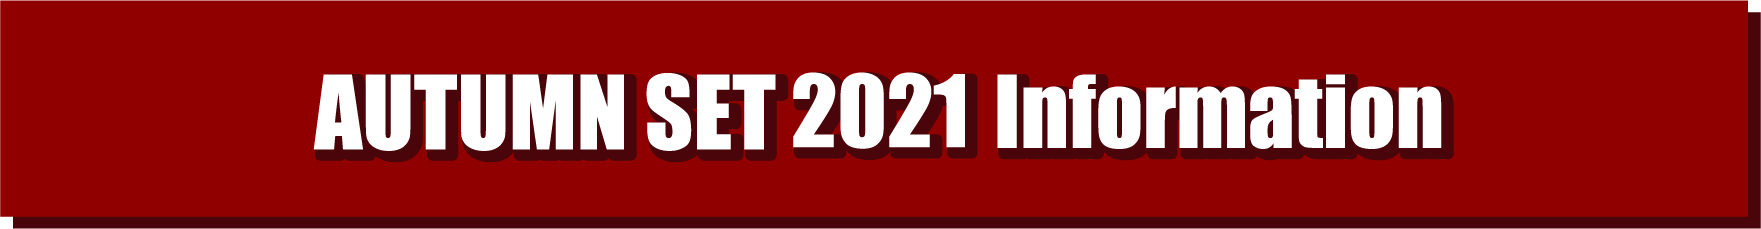 AUTUMN SET 2021 Information